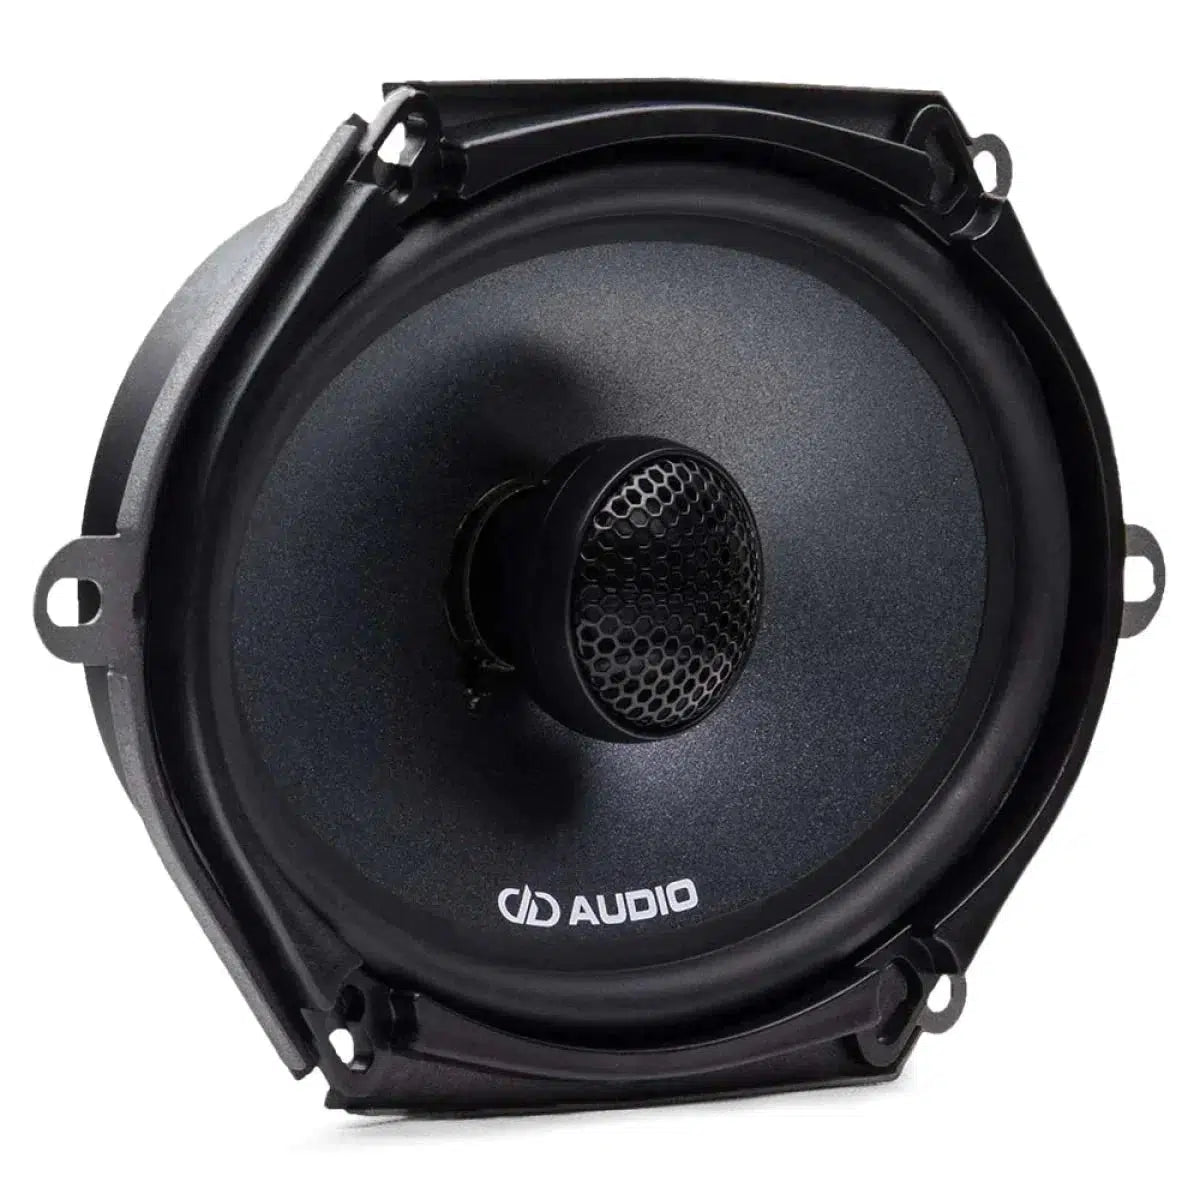 DD Audio-DX5x7-5 "x7" coaxial loudspeaker-Masori.de